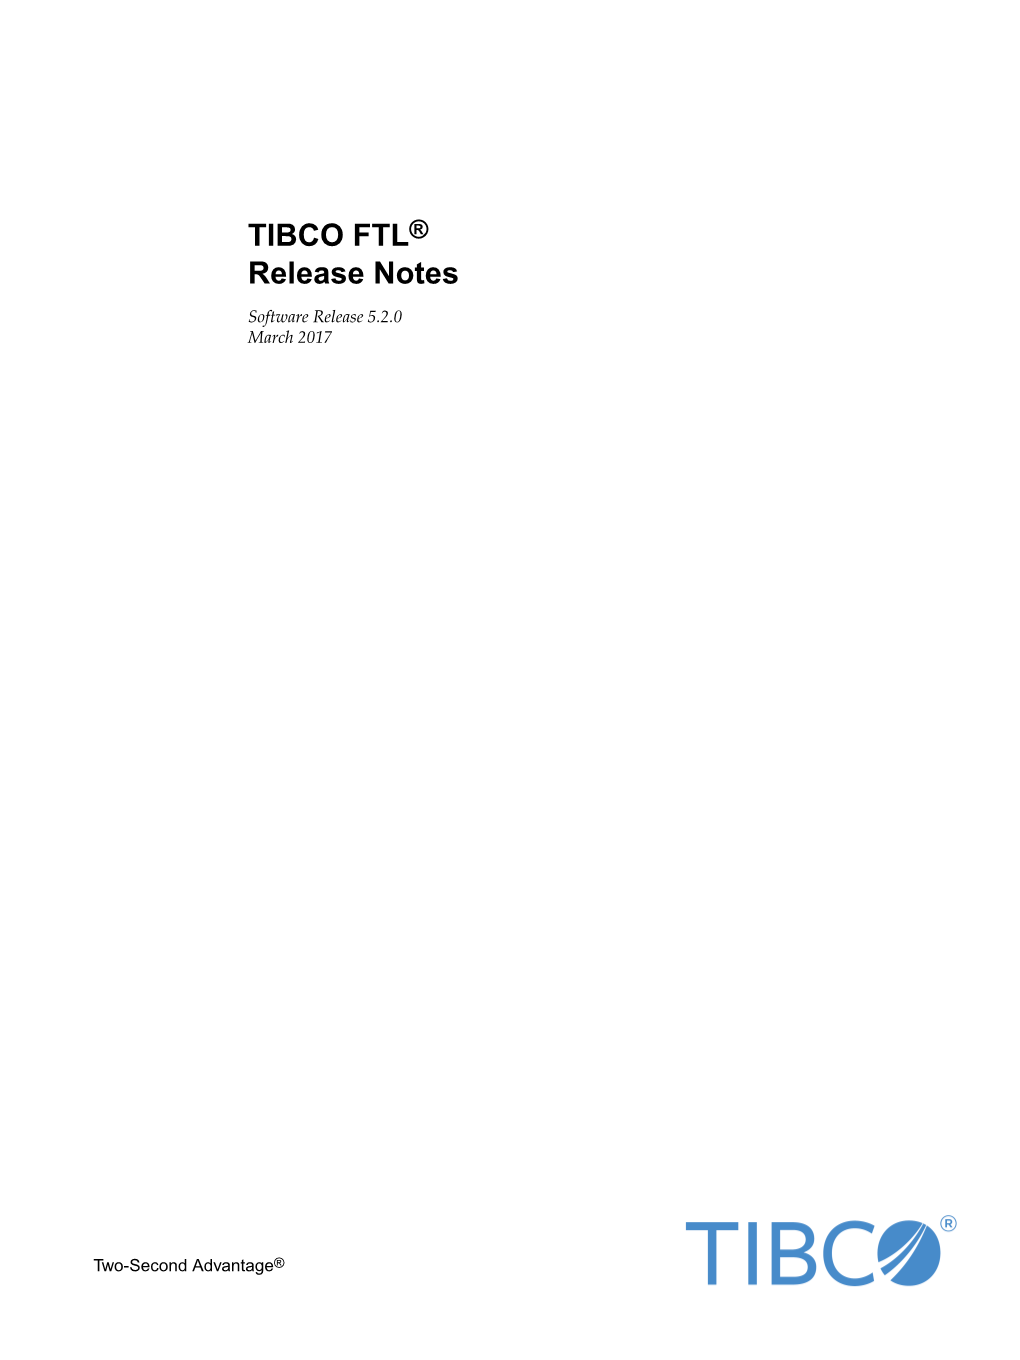 TIBCO FTL® Release Notes